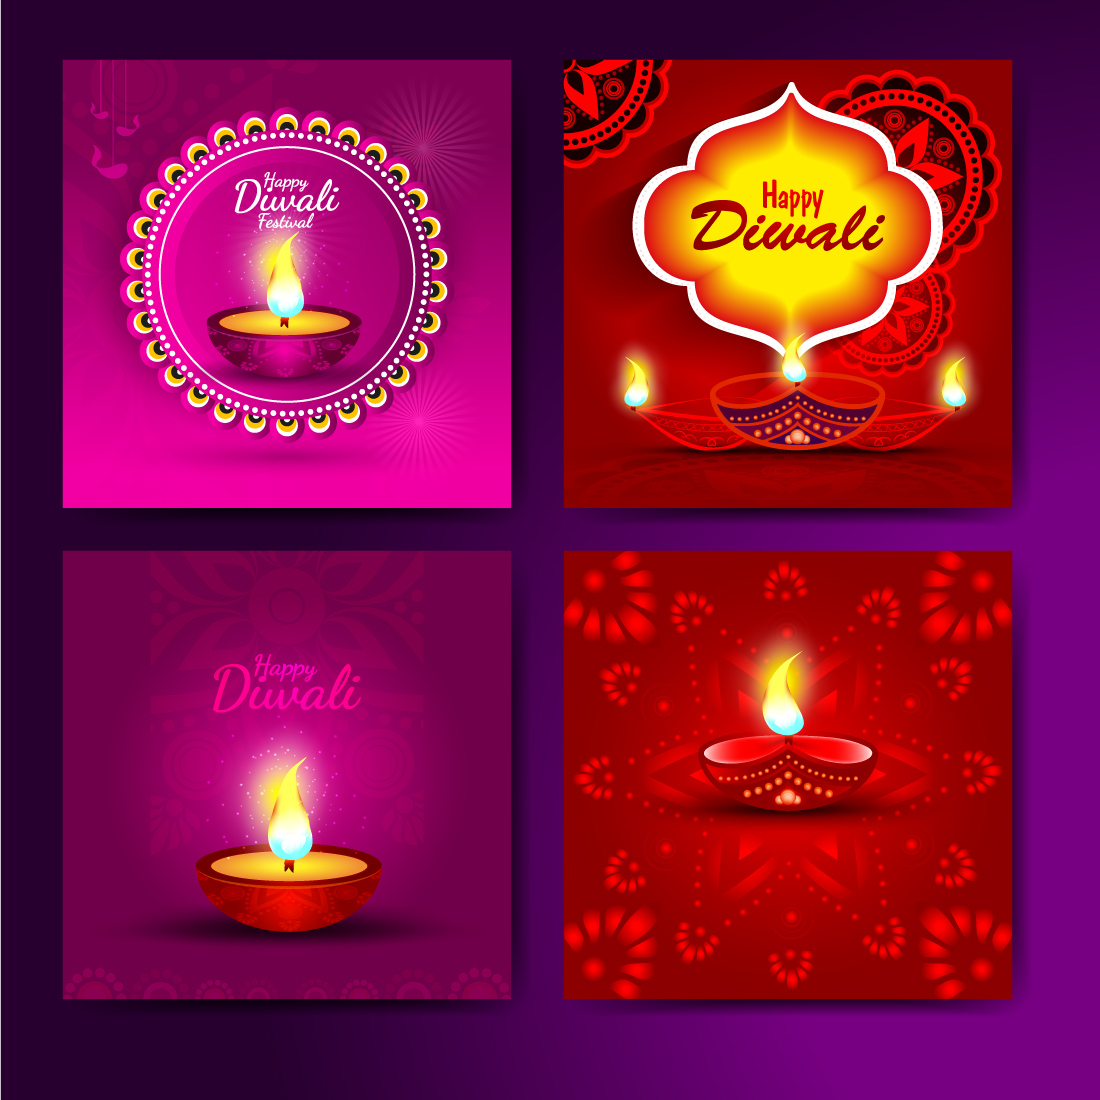 Happy Diwali Design preview image.